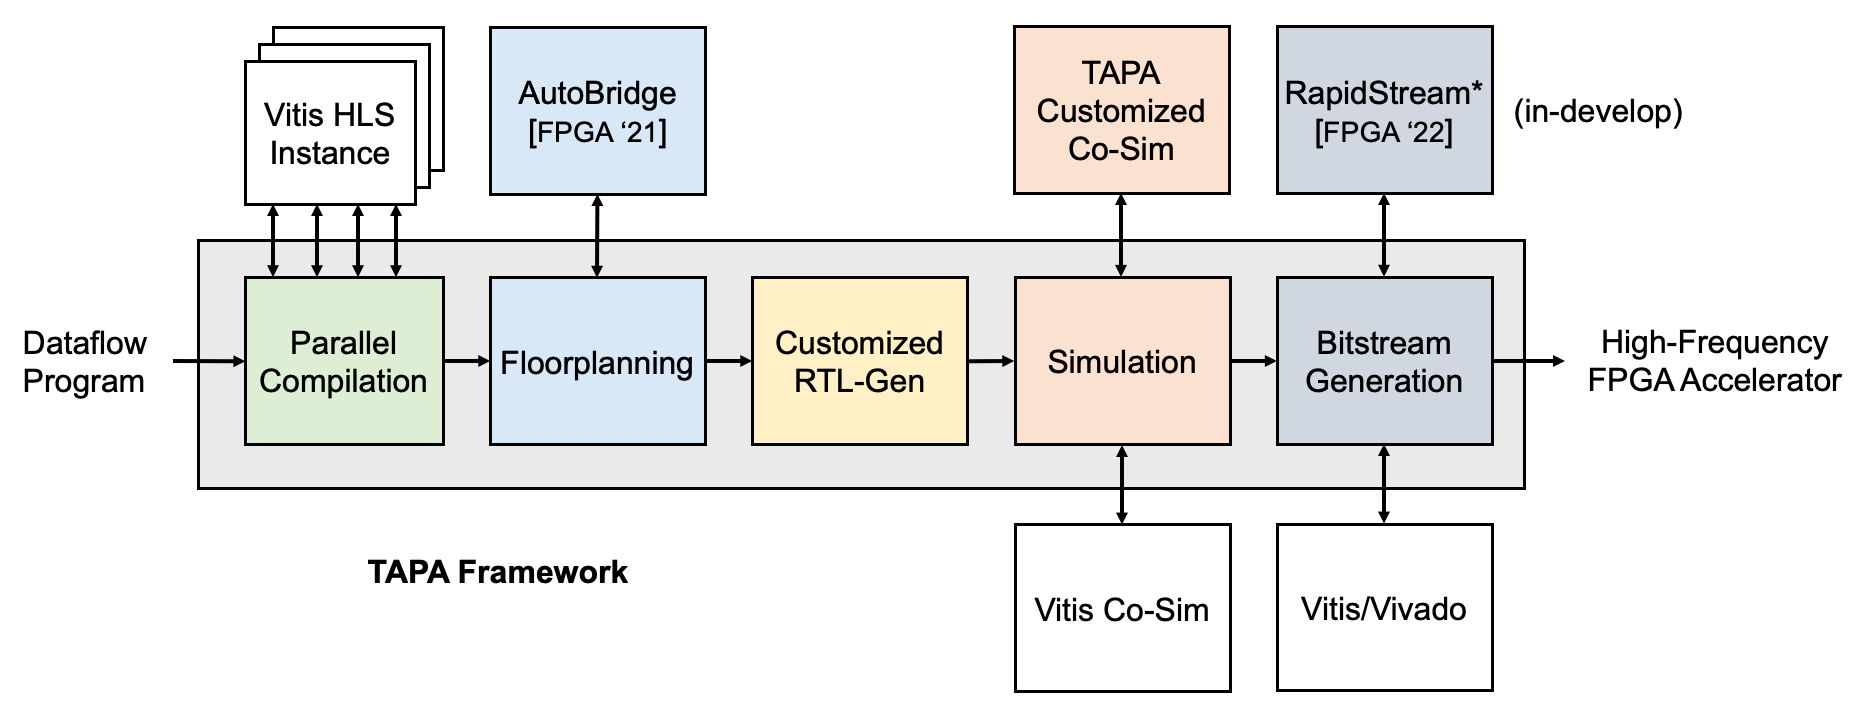 TAPA Framework